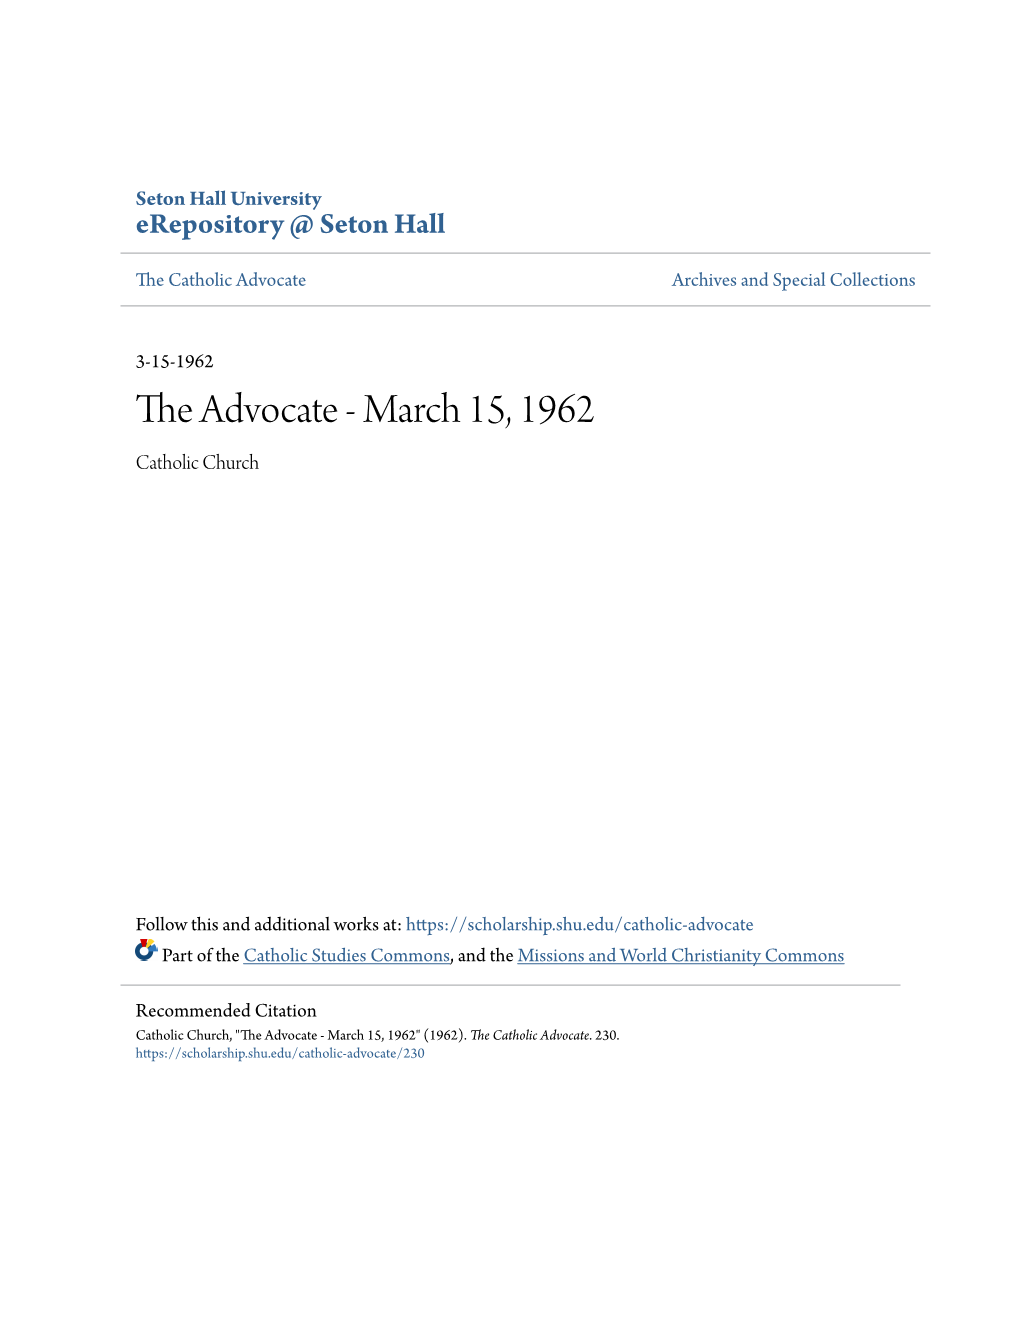 The Advocate - March 15, 1962 Catholic Church